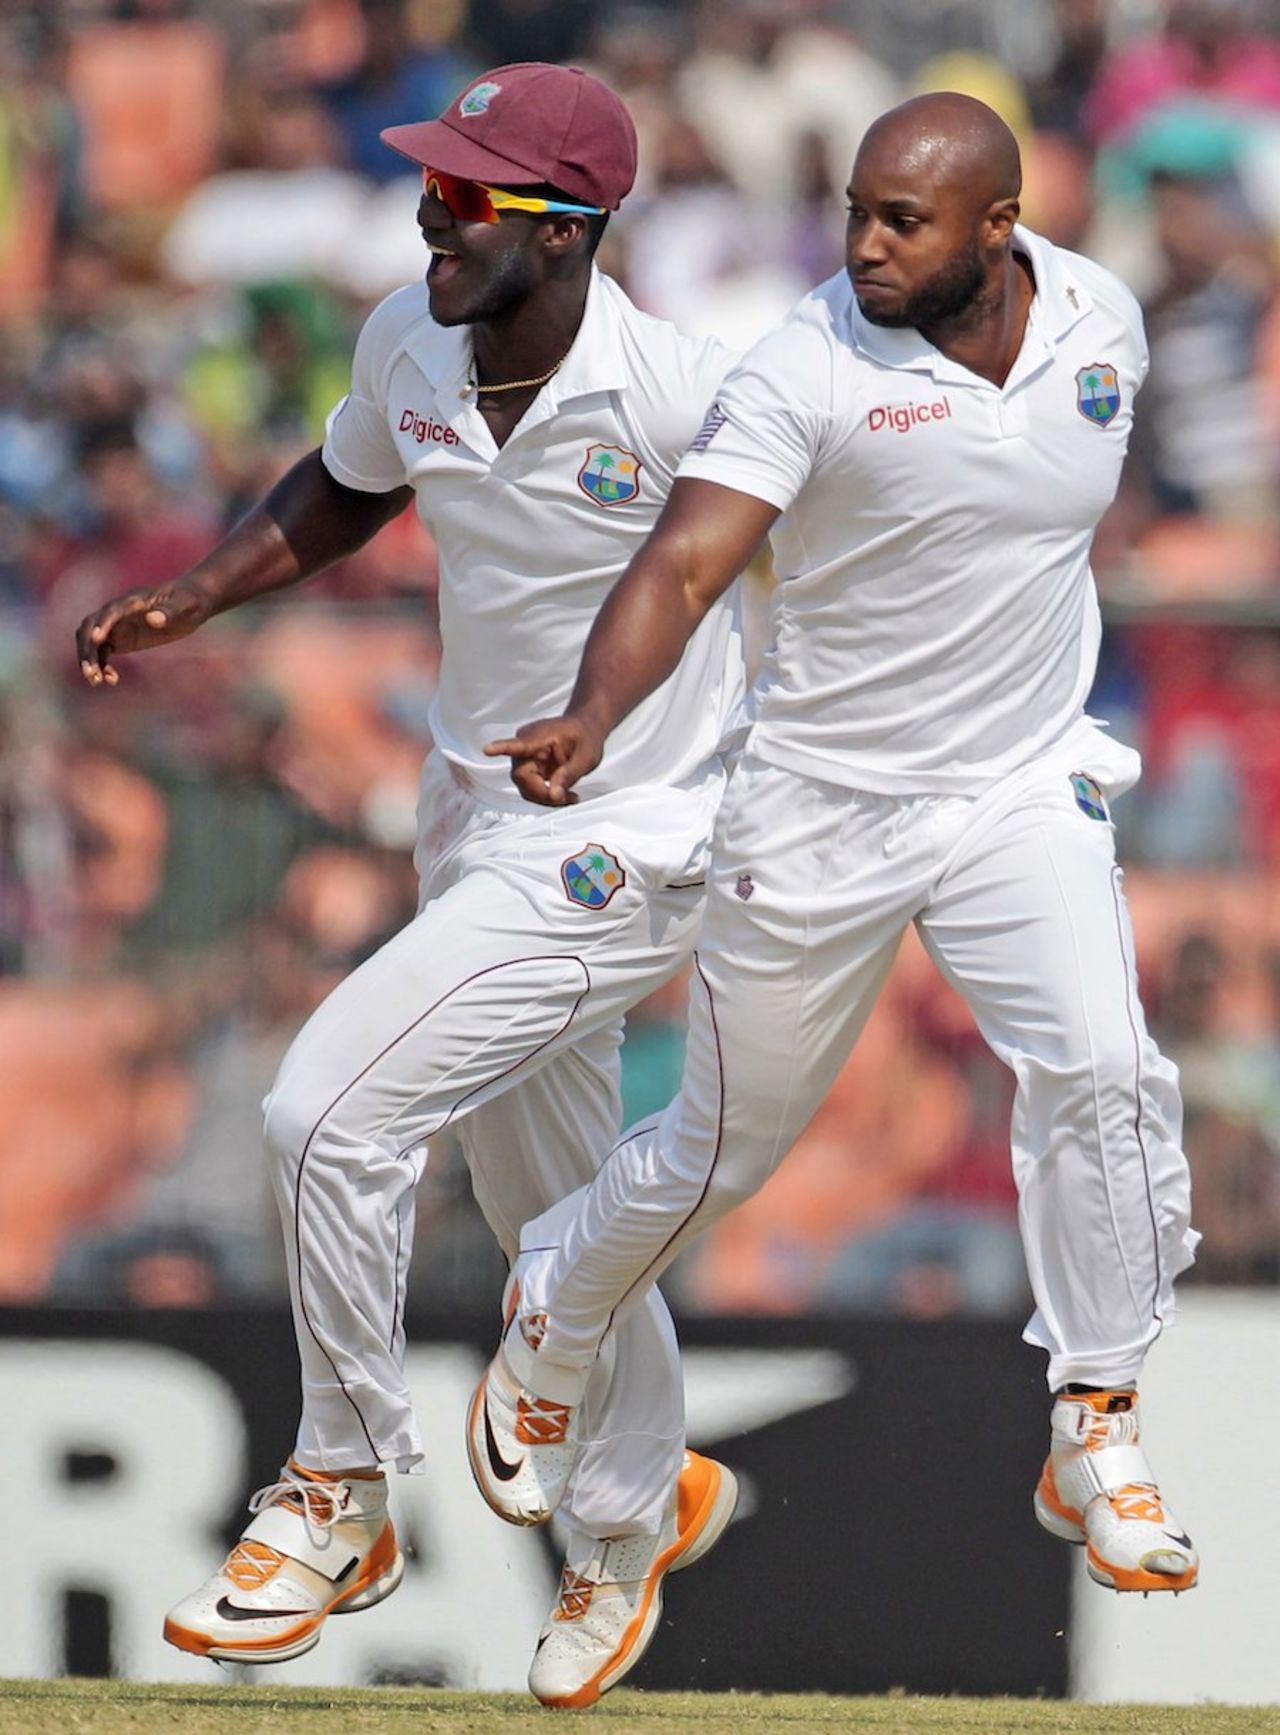 Tino Best and Darren Sammy celebrate a wicket, Bangladesh v West Indies, 2nd Test, Khulna, 4th day, November 24, 2012